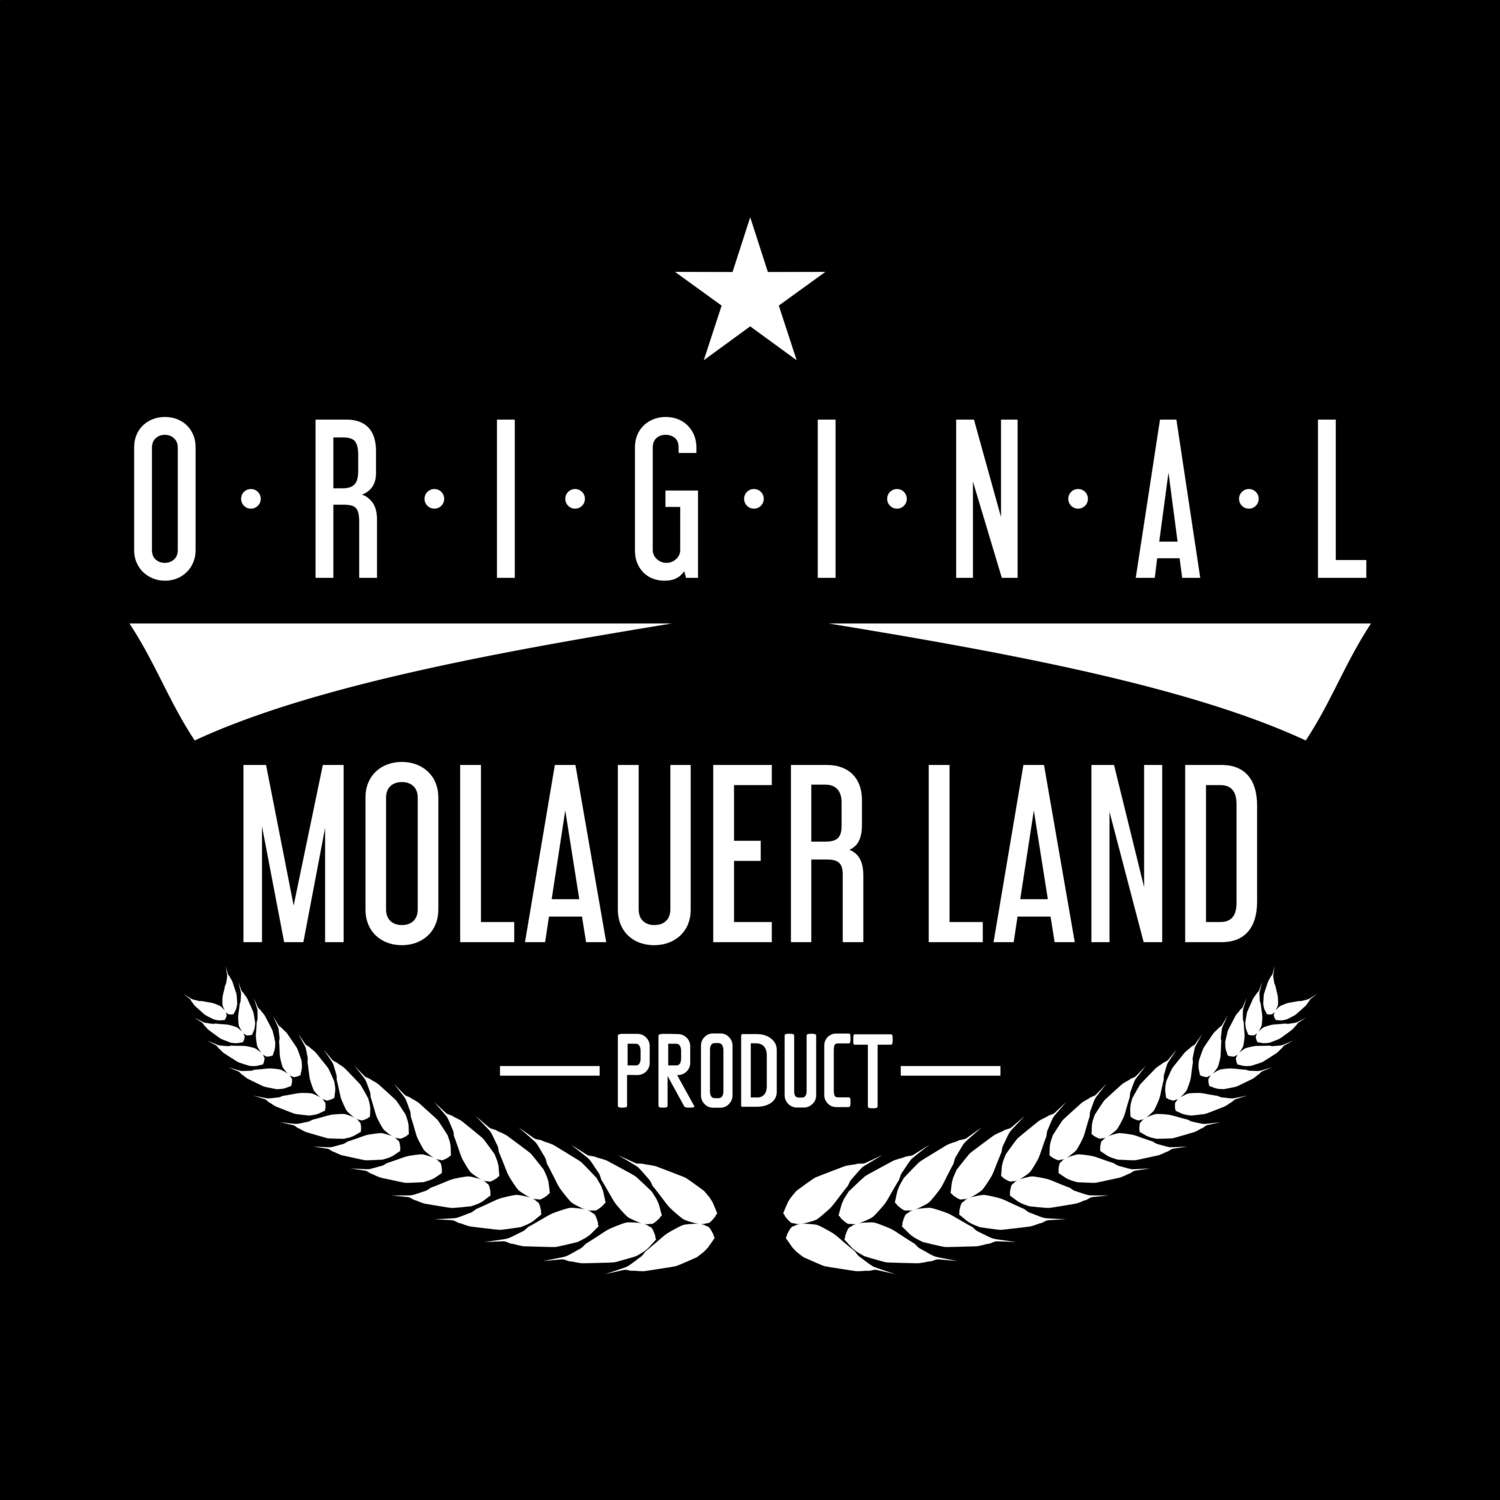 Molauer Land T-Shirt »Original Product«